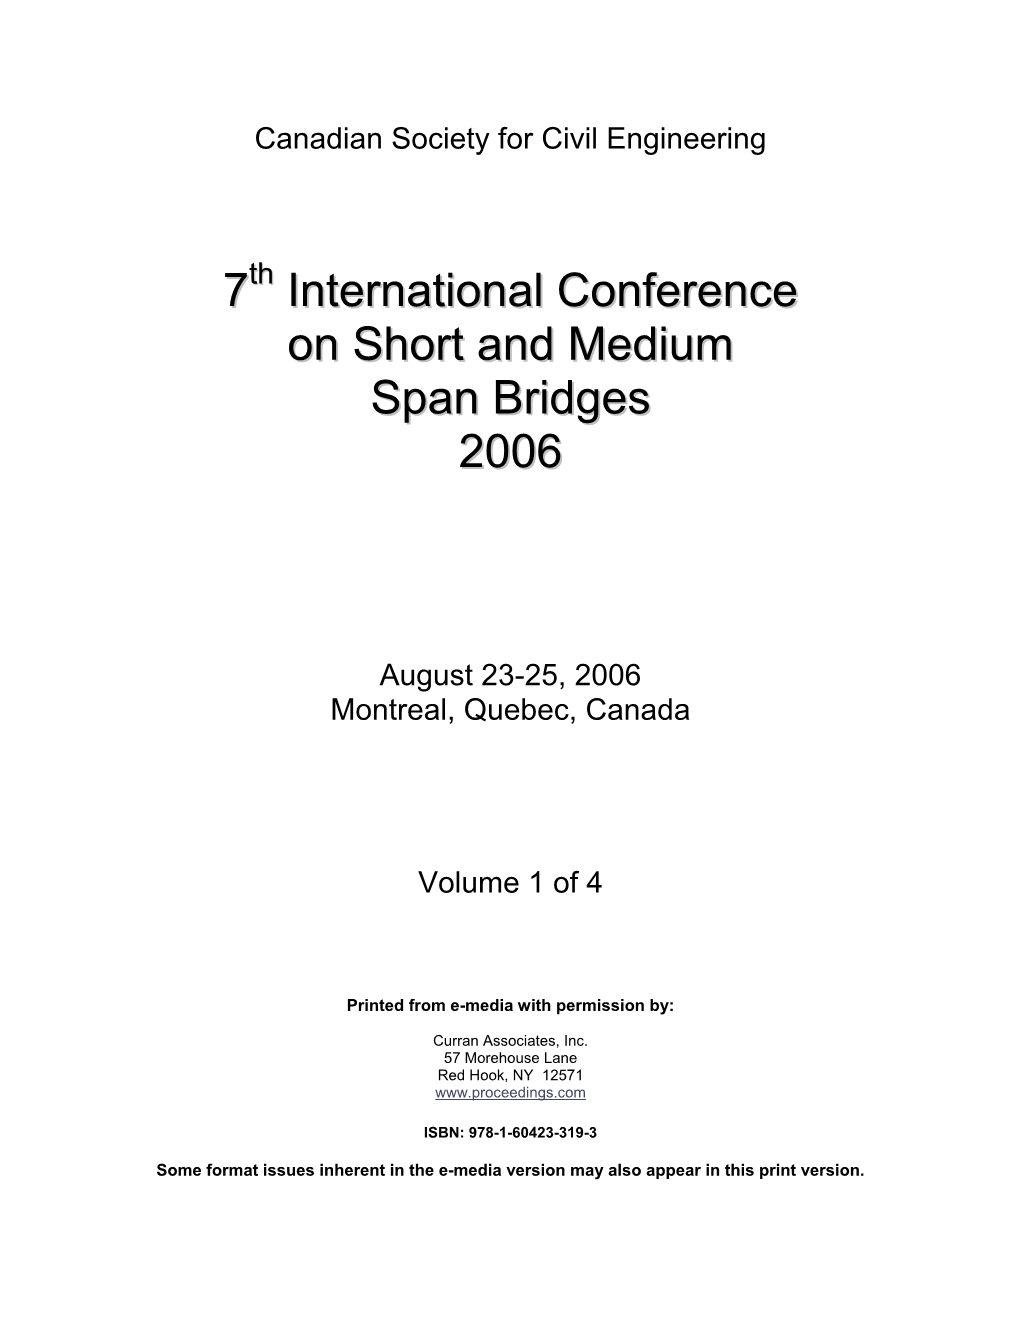 7 International Conference on Short and Medium Span Bridges 2006